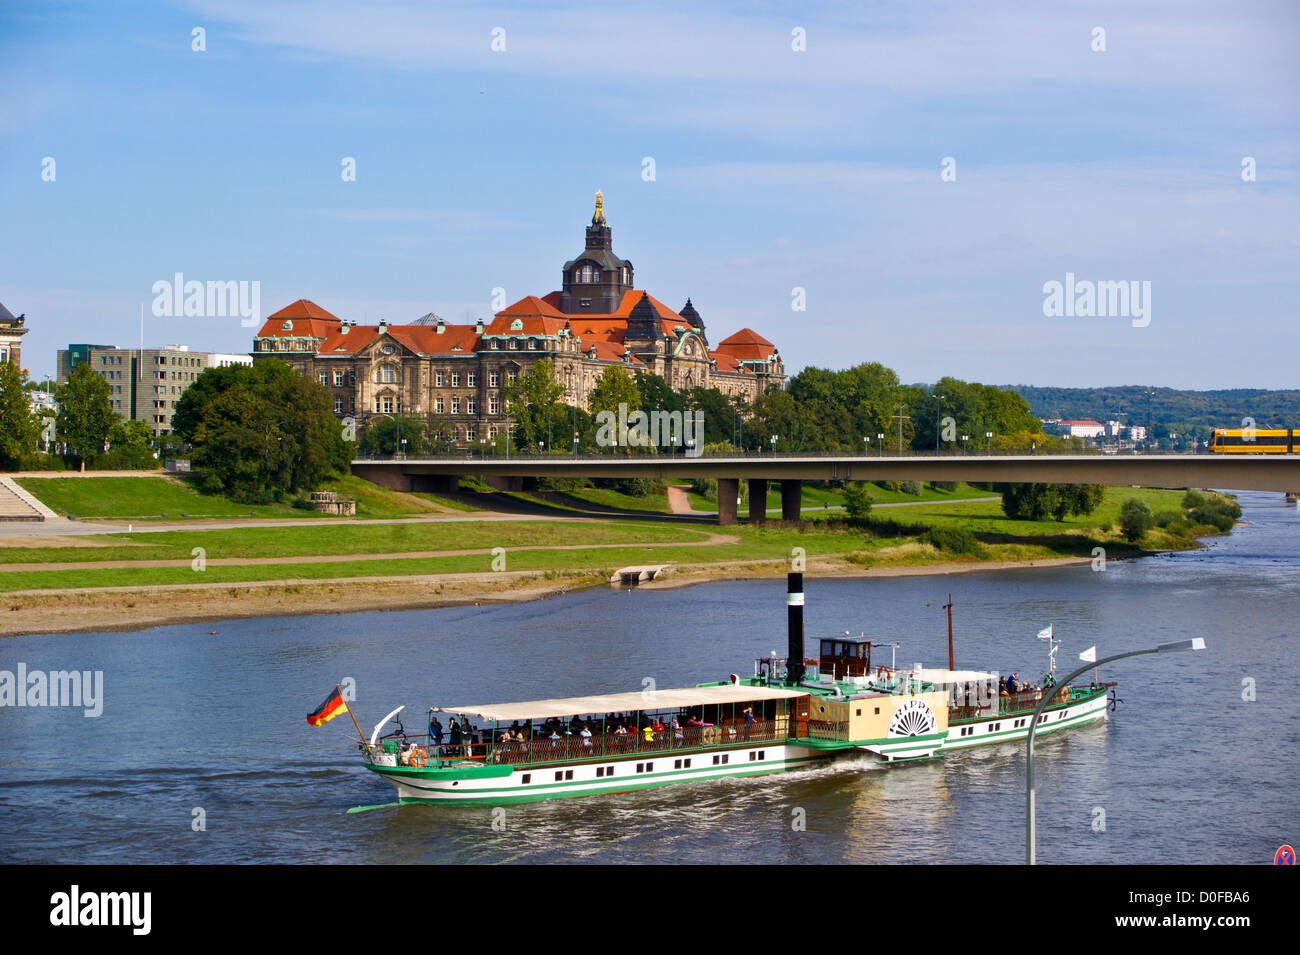 Japanisches Palais attraverso il fiume Elba, con una Weisse Flotte battello a vapore, Dresda, Sassonia, Sassonia, Germania Foto Stock